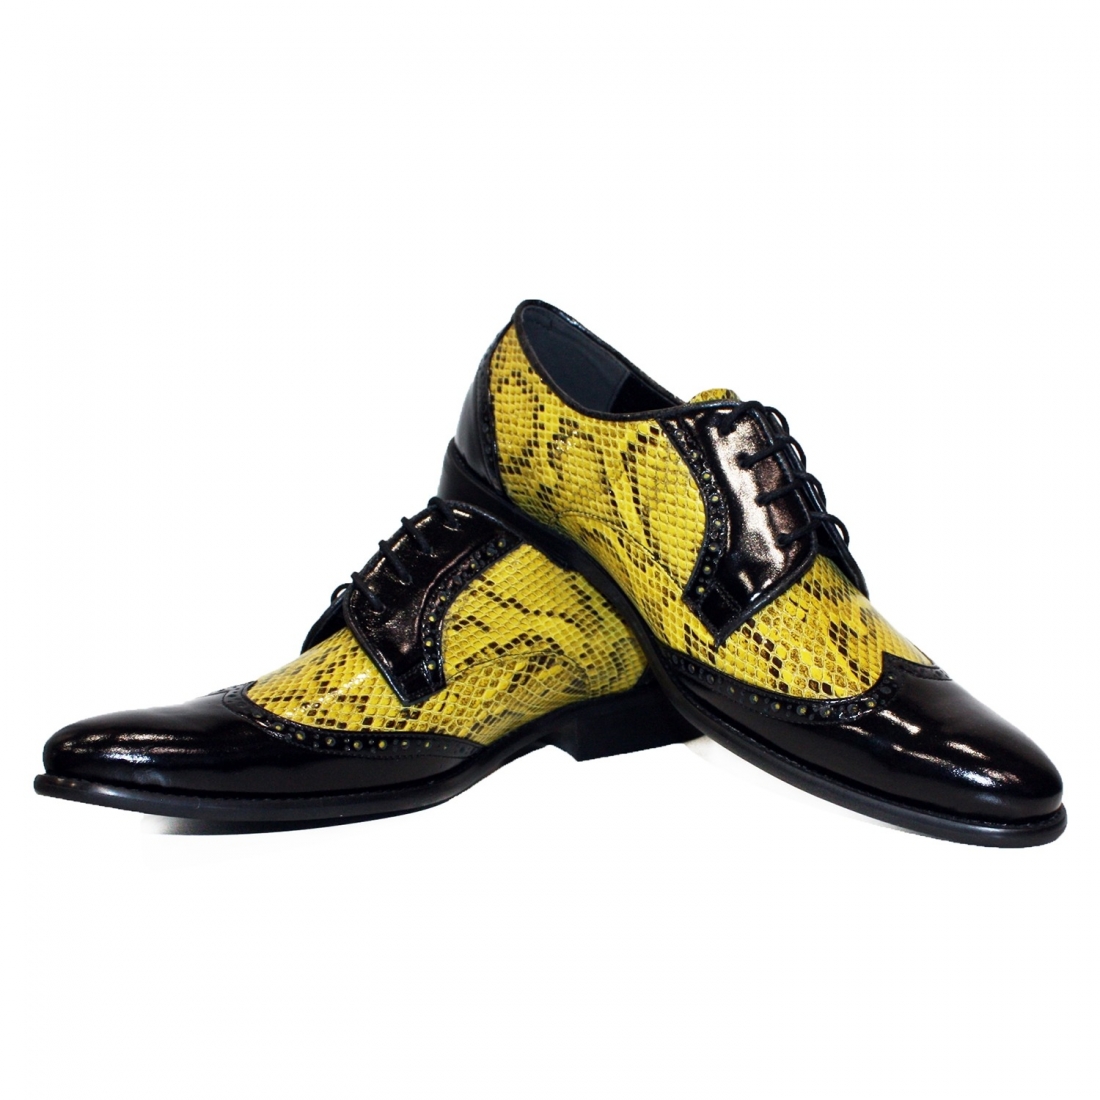 Modello Arkello - WingTip Schuhe - Handmade Colorful Italian Leather Shoes